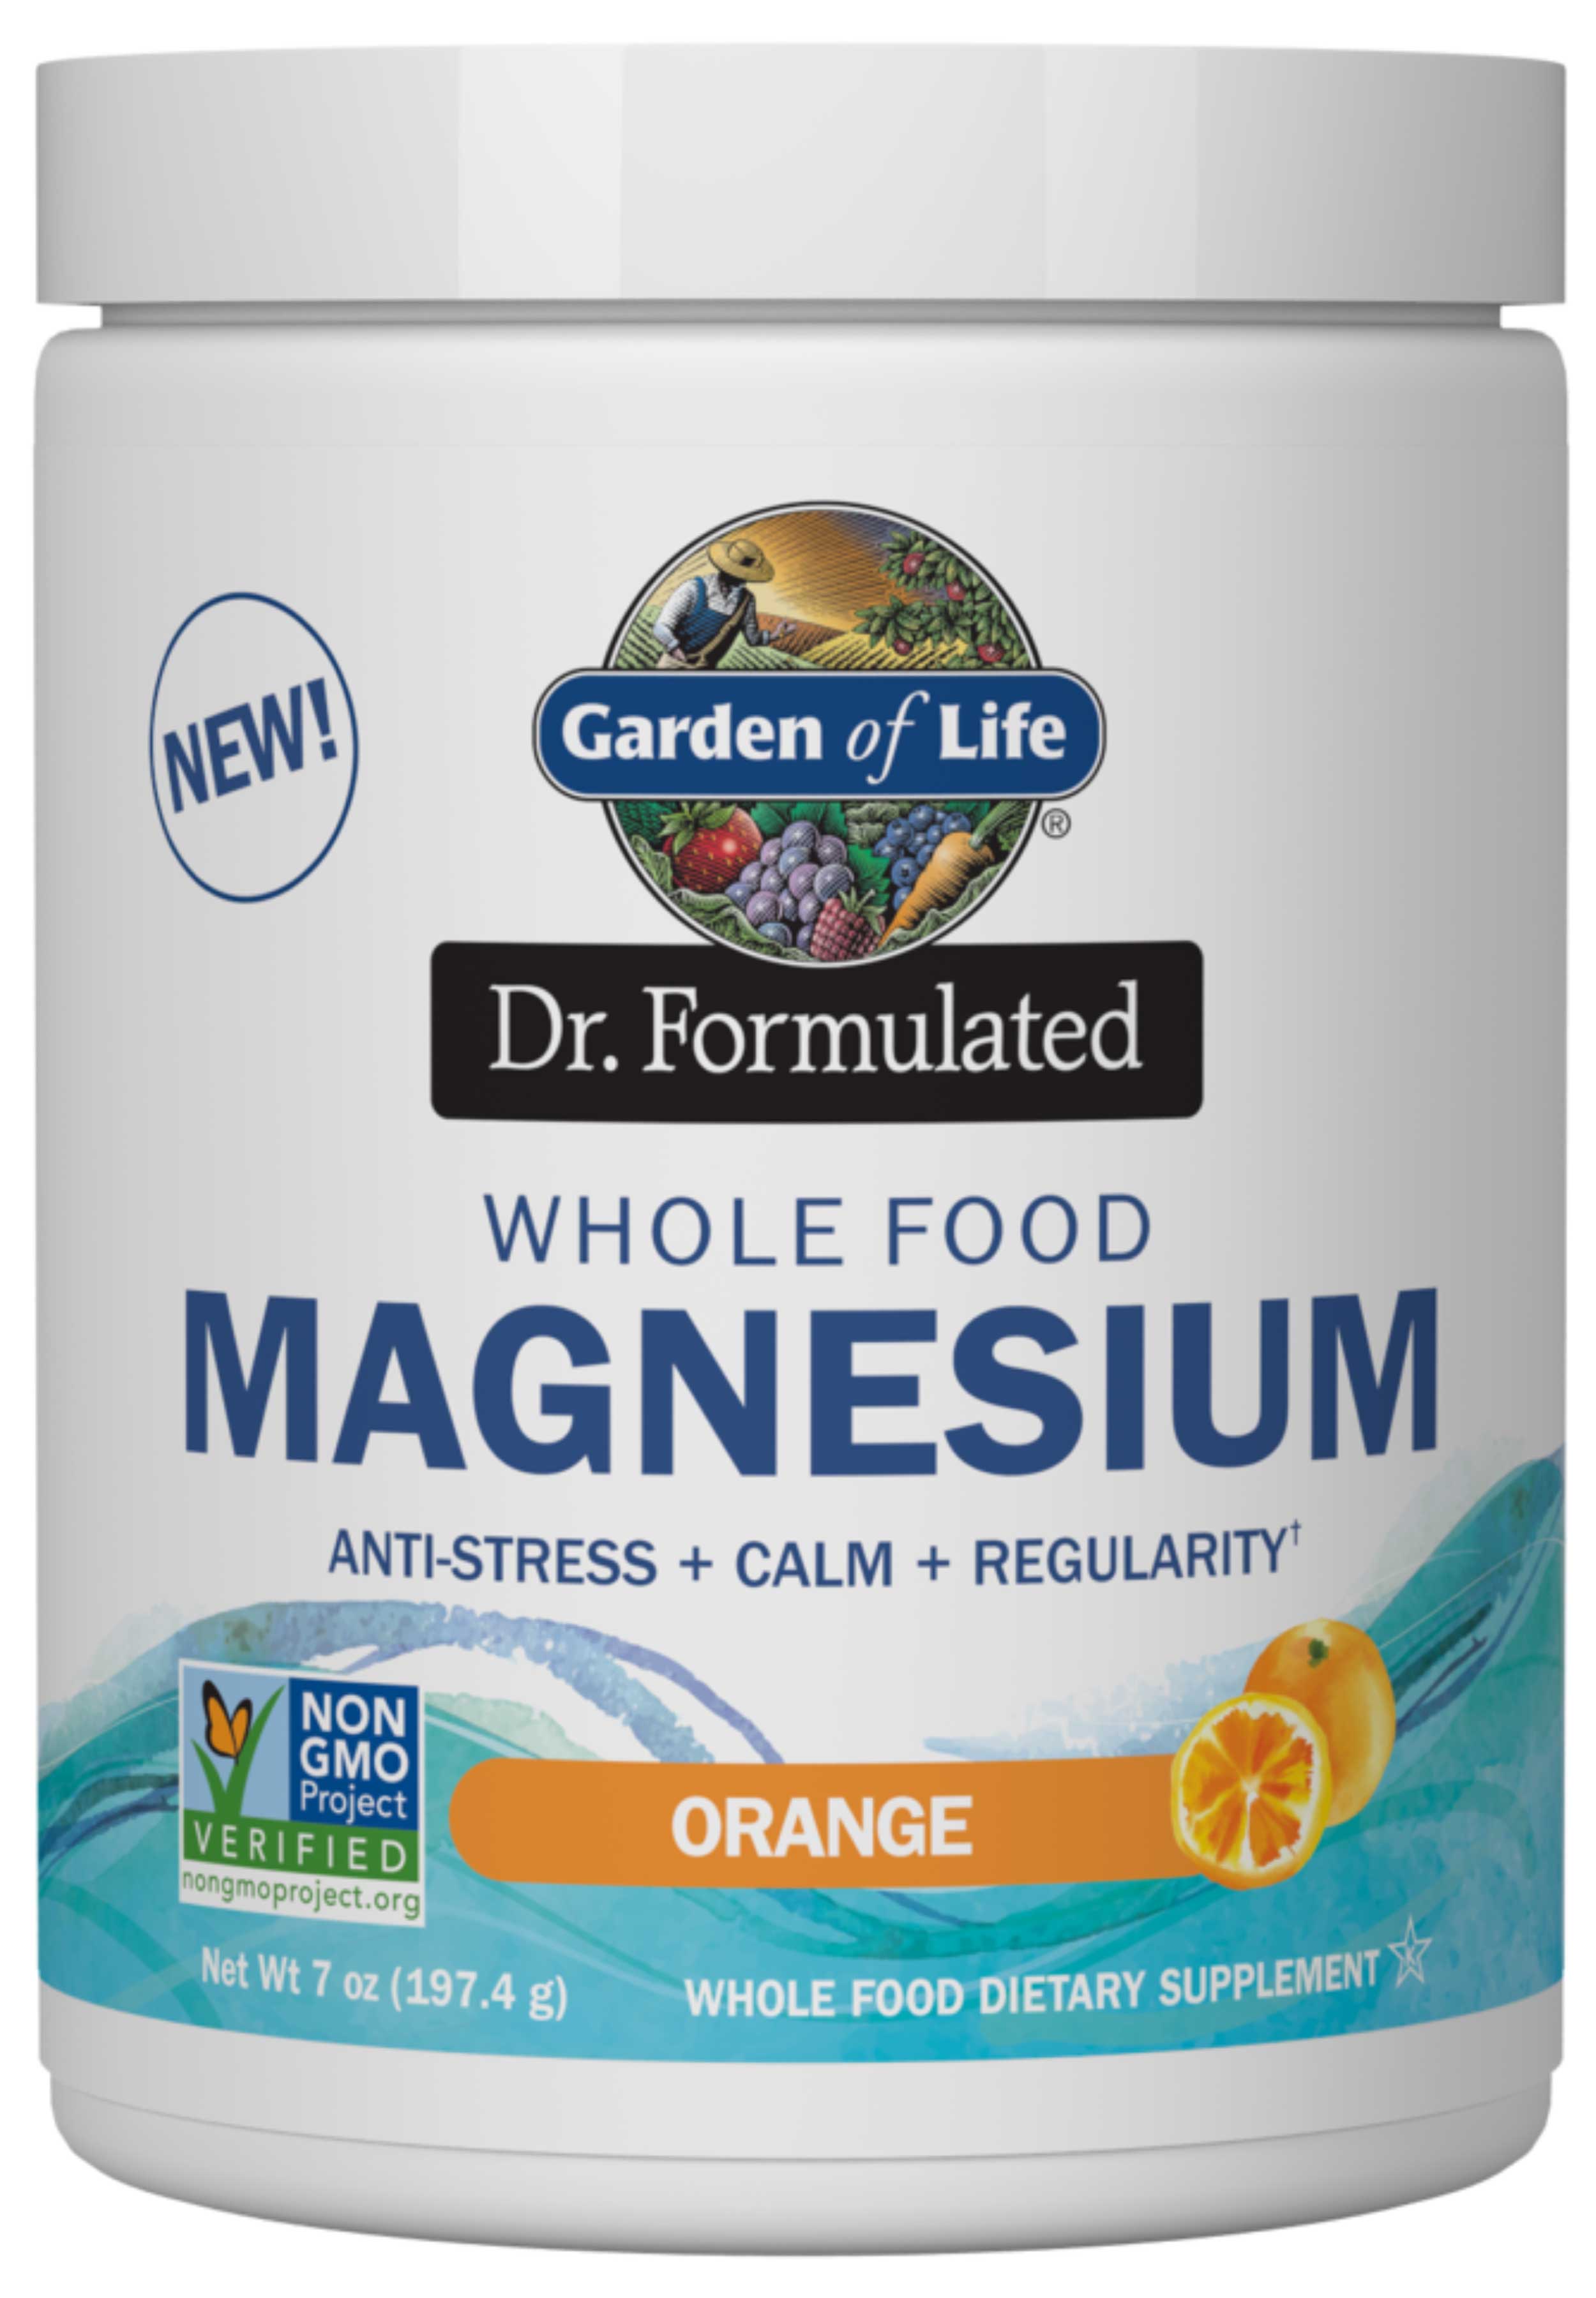 Garden of Life Dr. Formulated Whole Food Magnesium Orange Powder